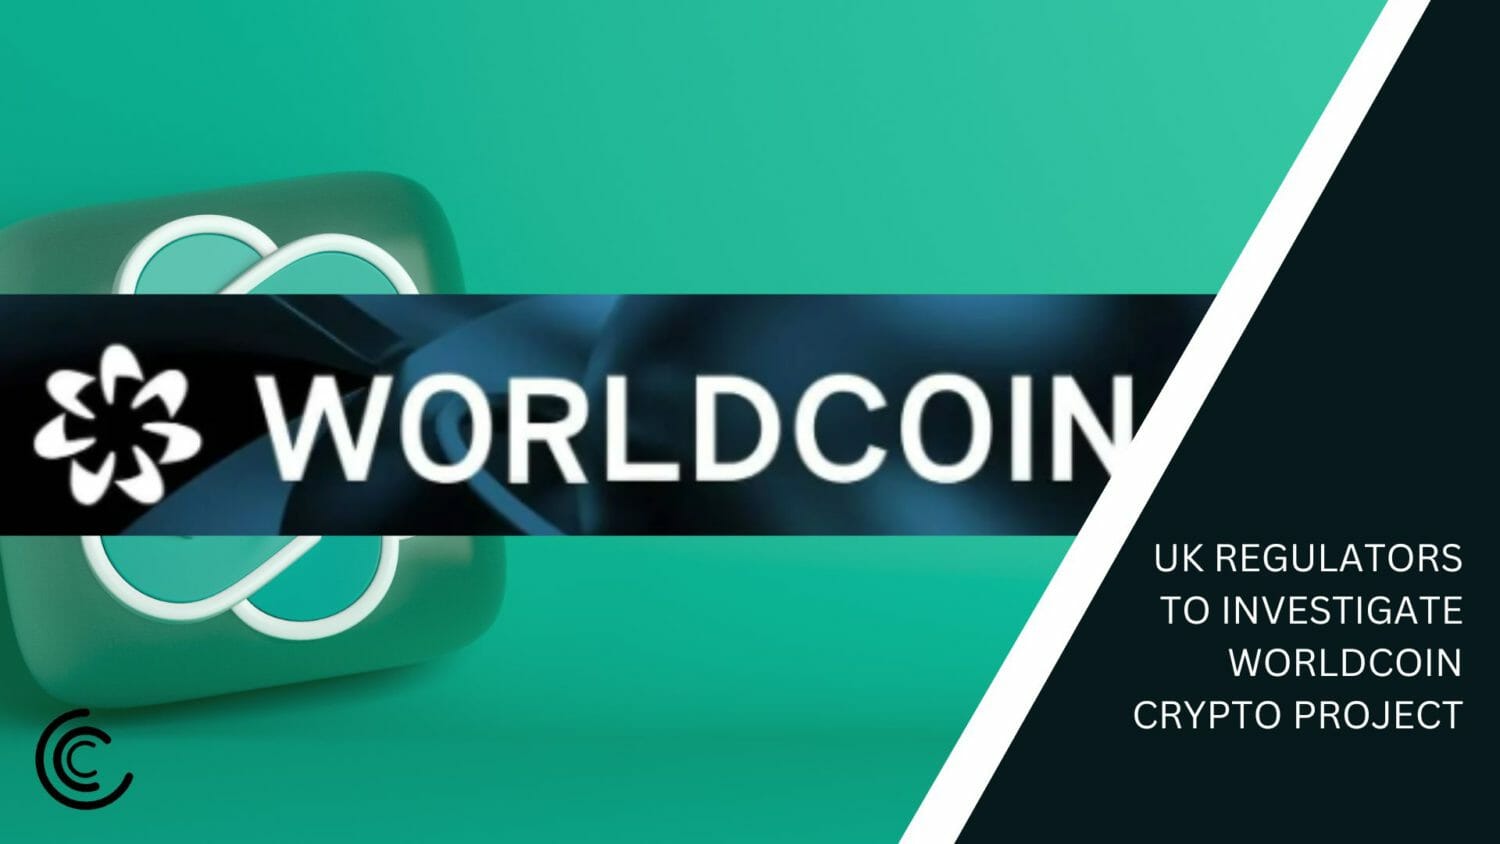 Uk Regulators To Investigate Worldcoin Crypto Project